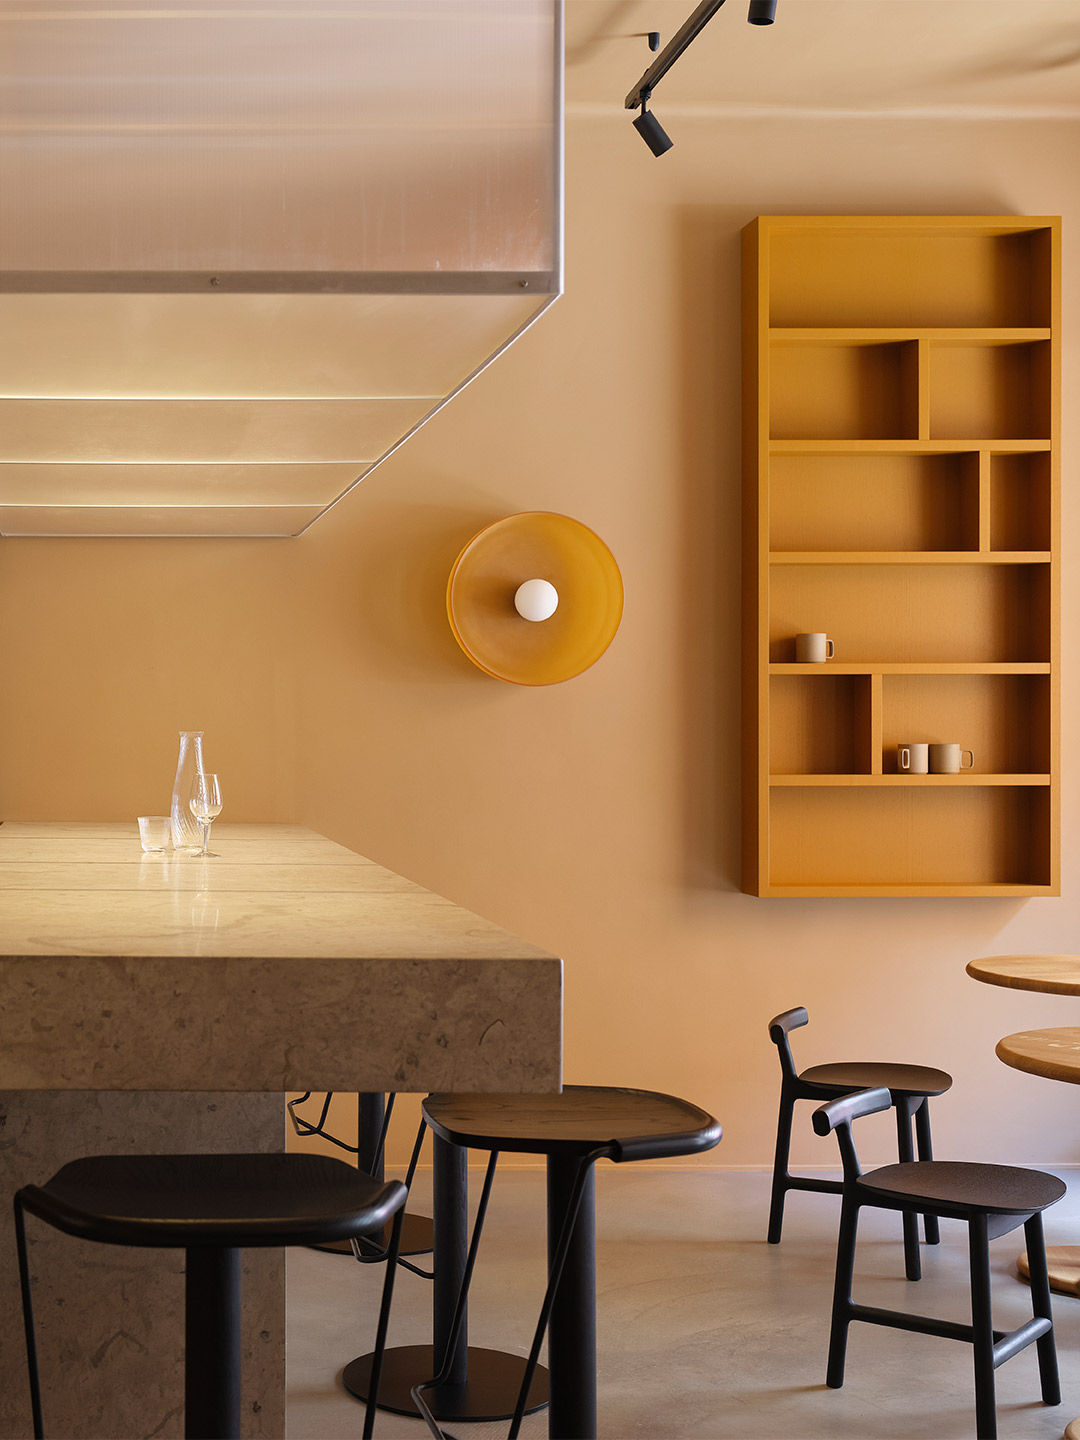 The Samsen Atelier workspace and wine bar in Sweden by Note Design Studio